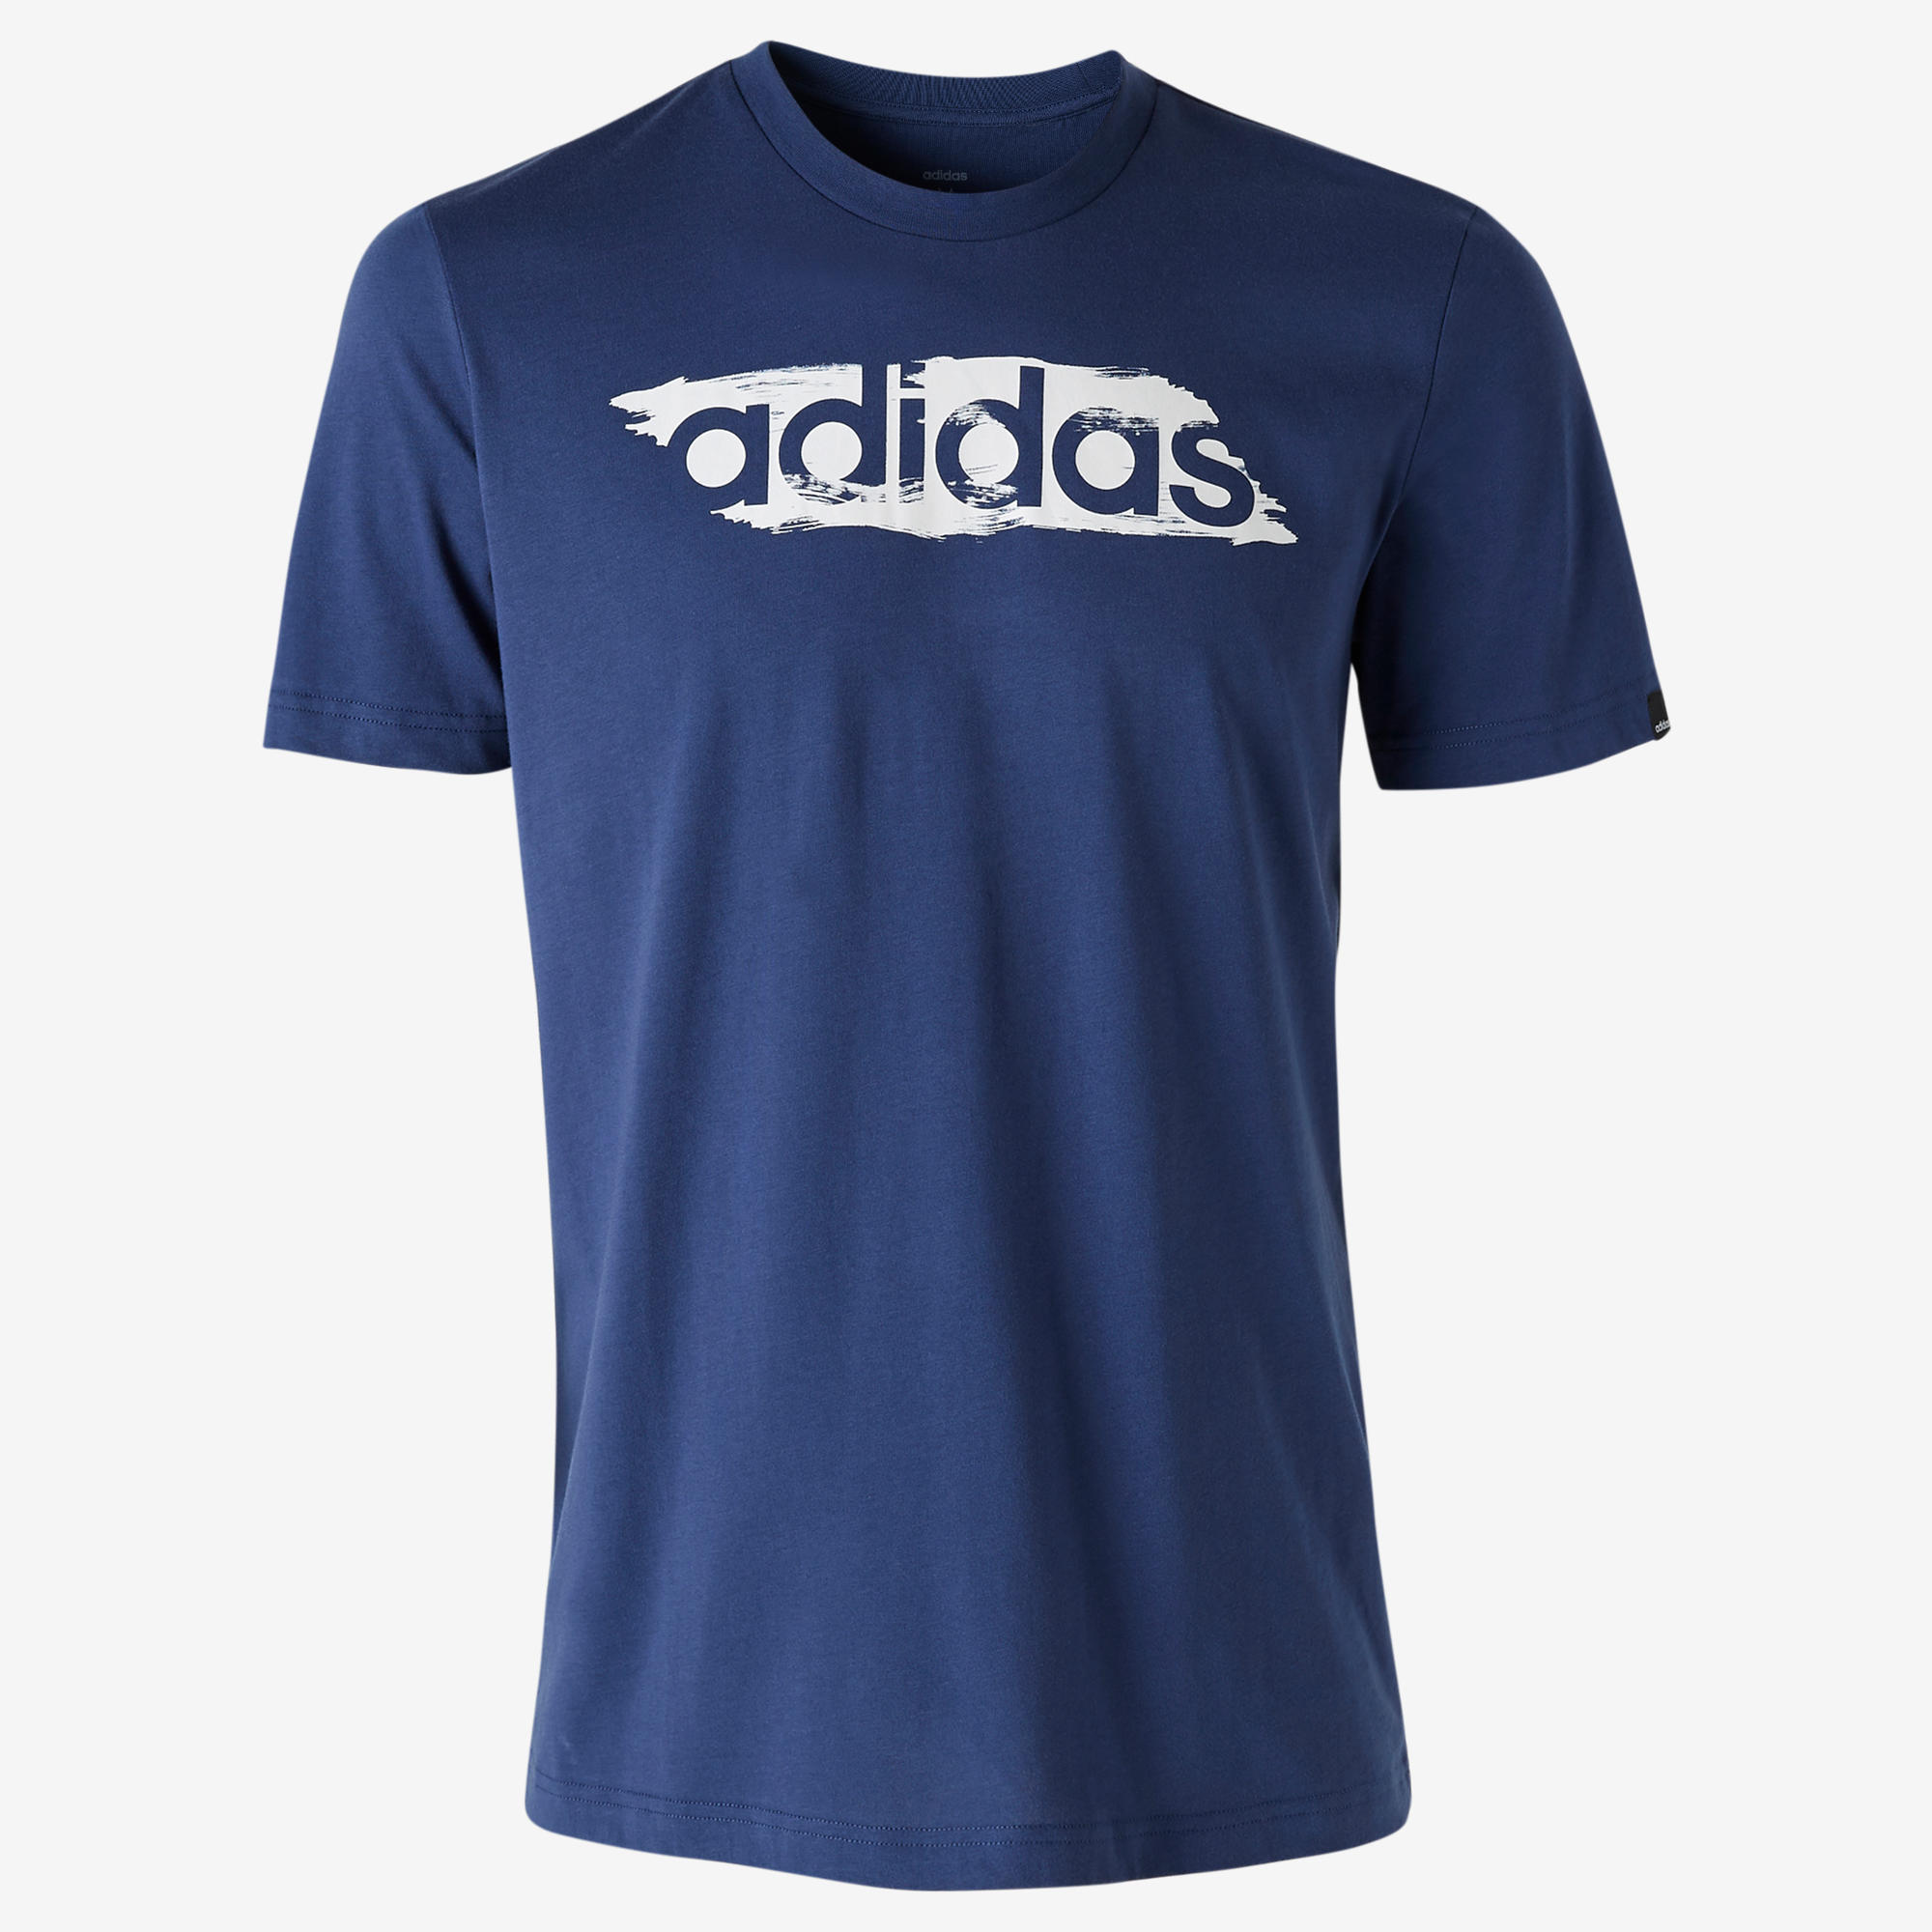 decathlon adidas t shirt